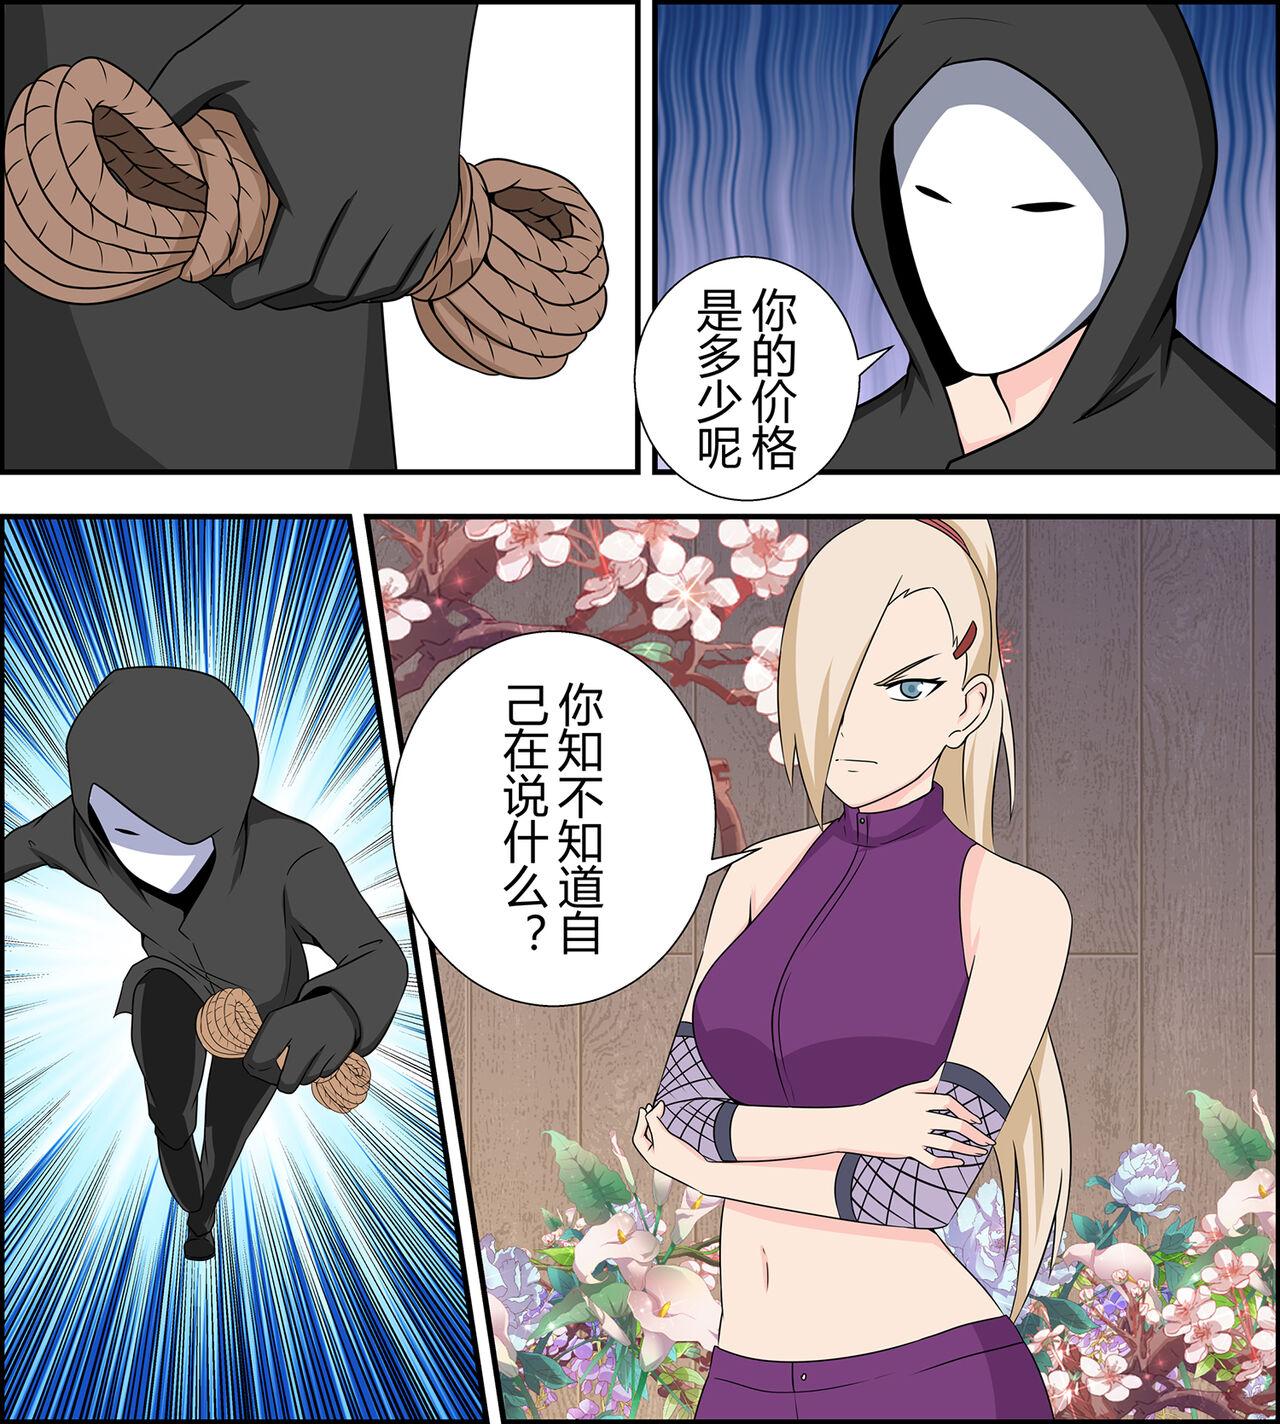 Free Blowjob Porn Yamanaka ino kidnapping case - Naruto Rubdown - Picture 3